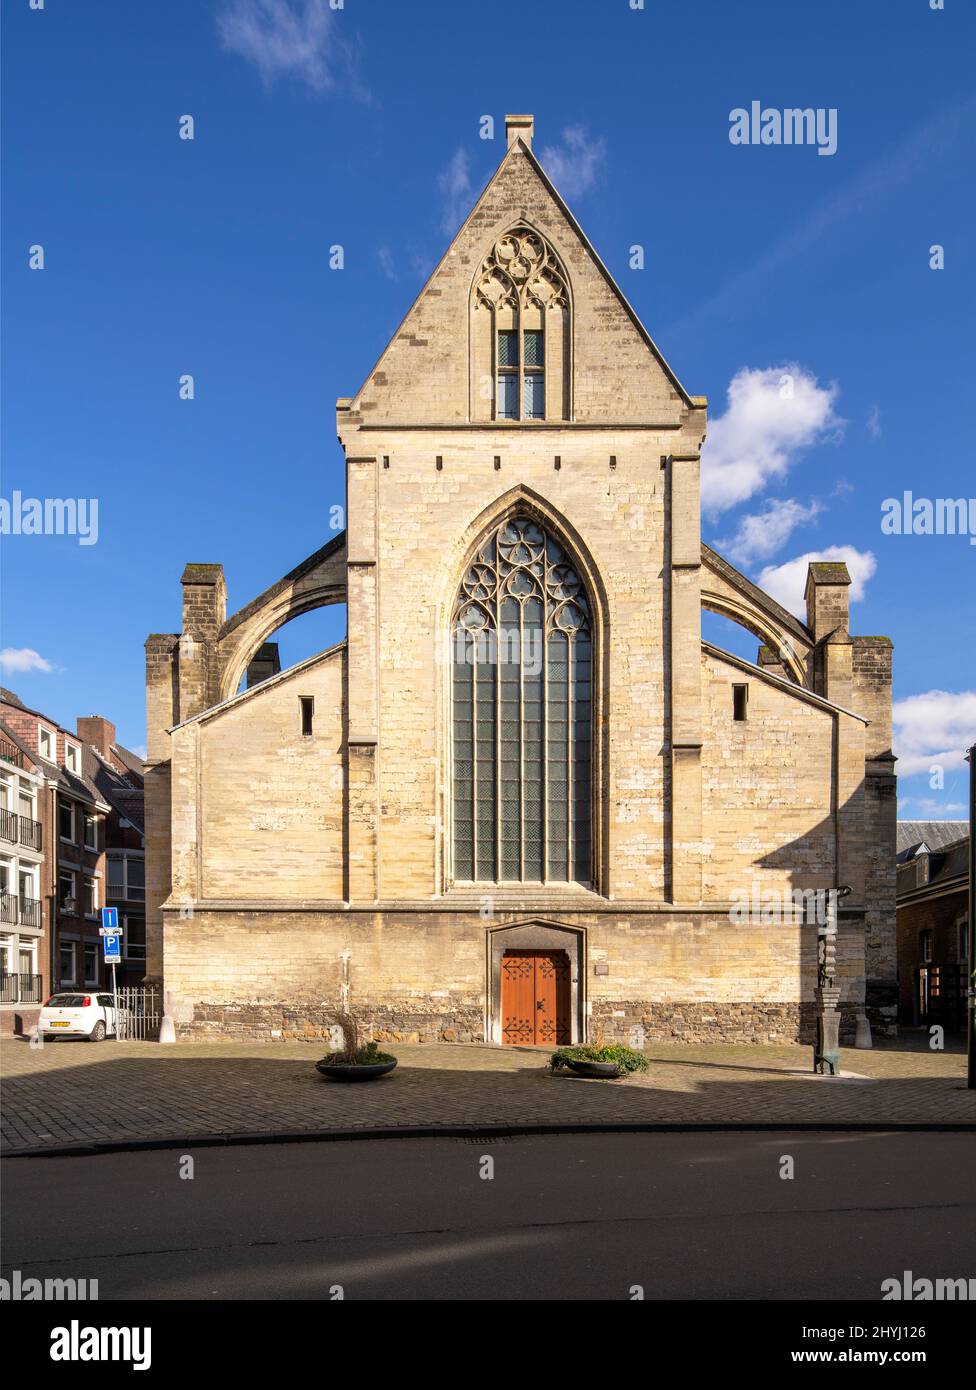 Maastricht, Oude Minderbroedersklooster, Franziskanerkloster, Heute: Sociaal Historisch Centrum voor Limburg, Westfassade der Klosterkirche Foto Stock